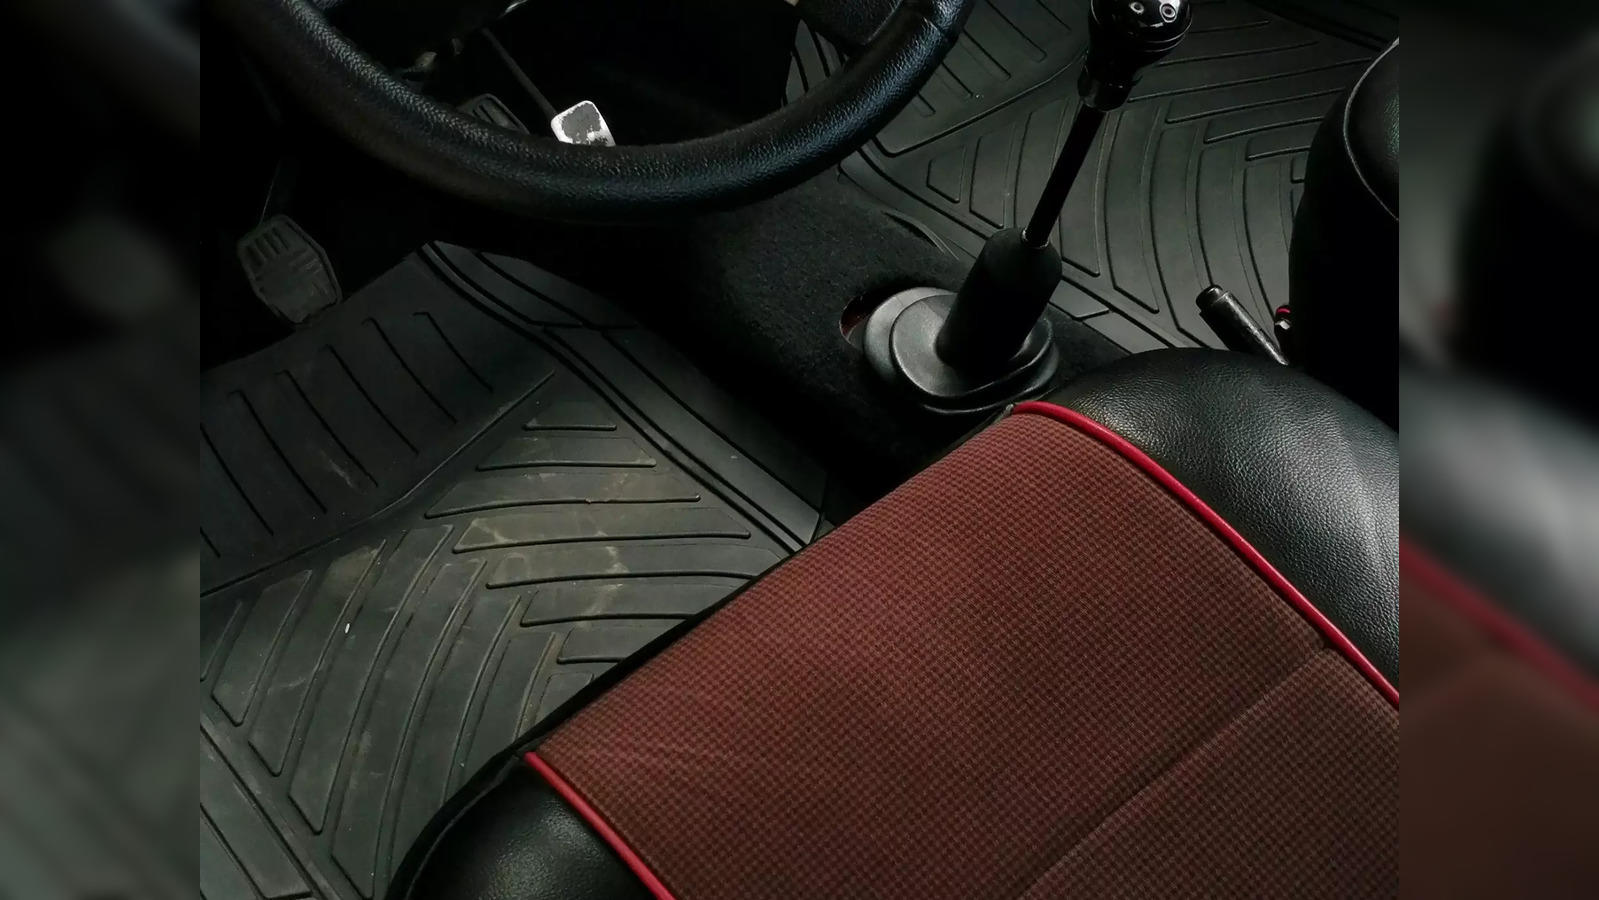 Green Checkered Pattern Car Floor Mats Decor Anti-Slip Universal